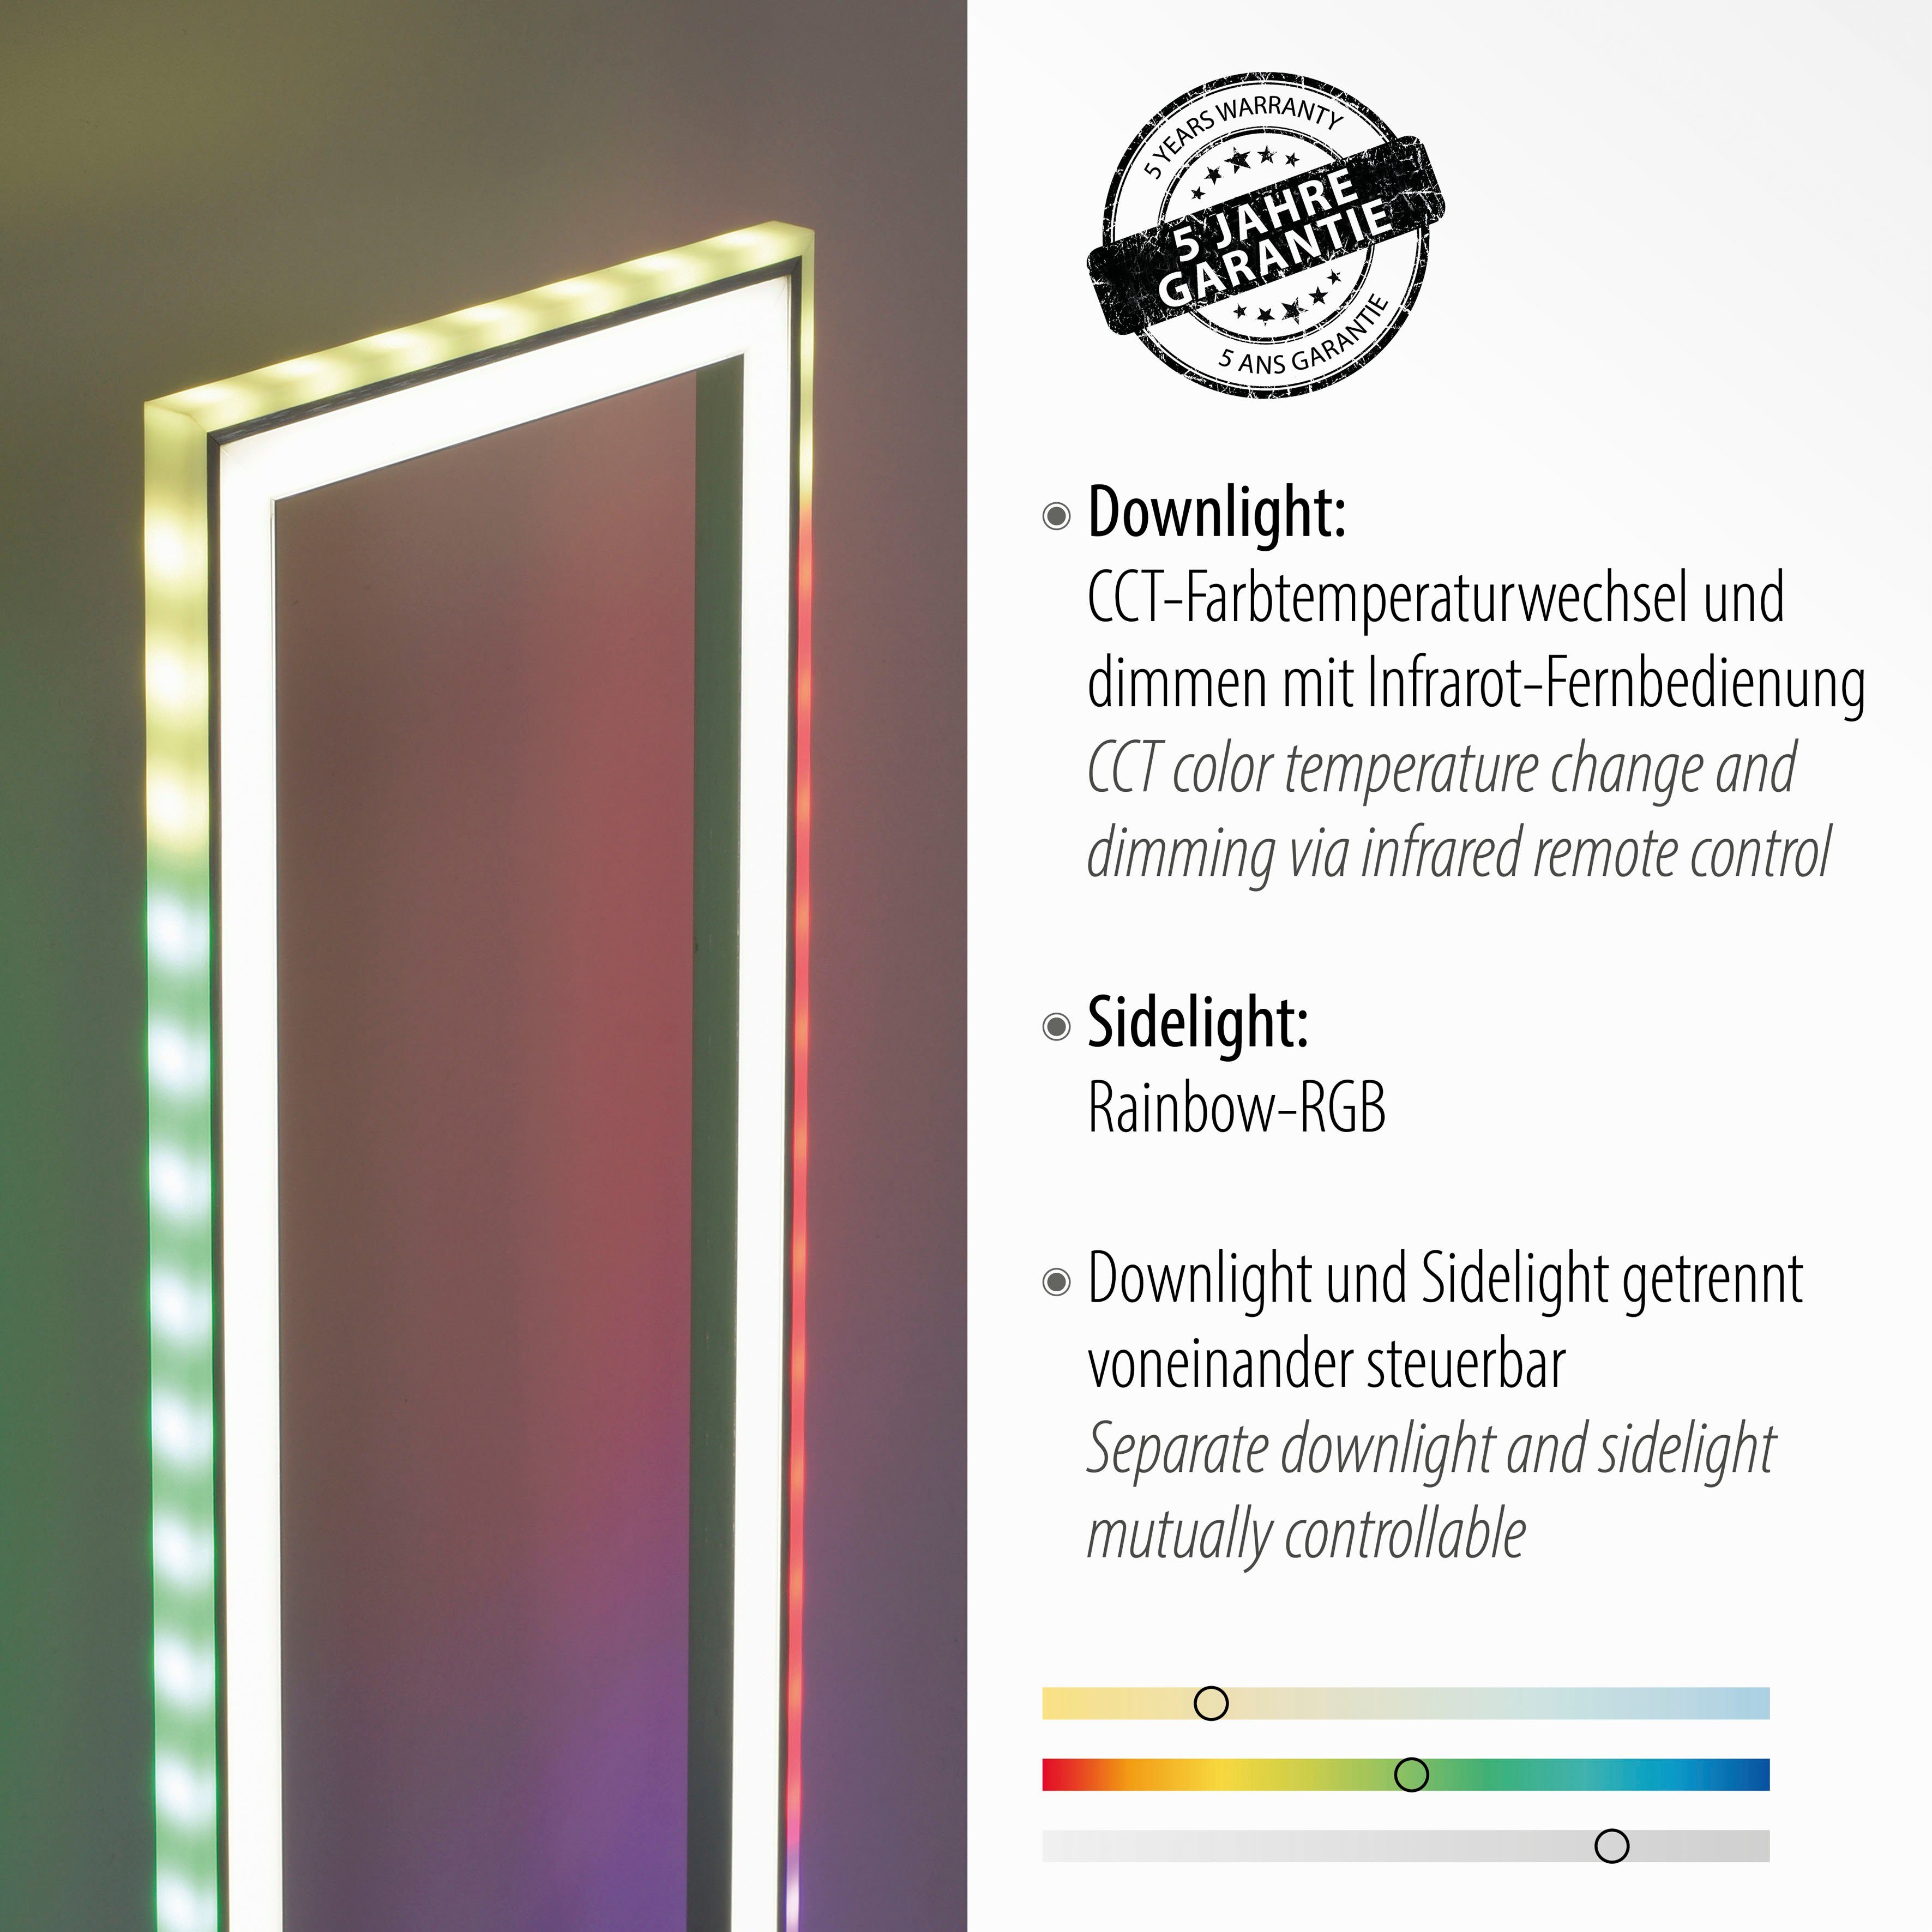 my home LED LED Sidelight: über dimmbar Downlight: Fernbedienung, integriert, Rainbow-RGB, Stehlampe 2700-5000K, Infrarot-Fernbed. warmweiß kaltweiß, fest - Luan